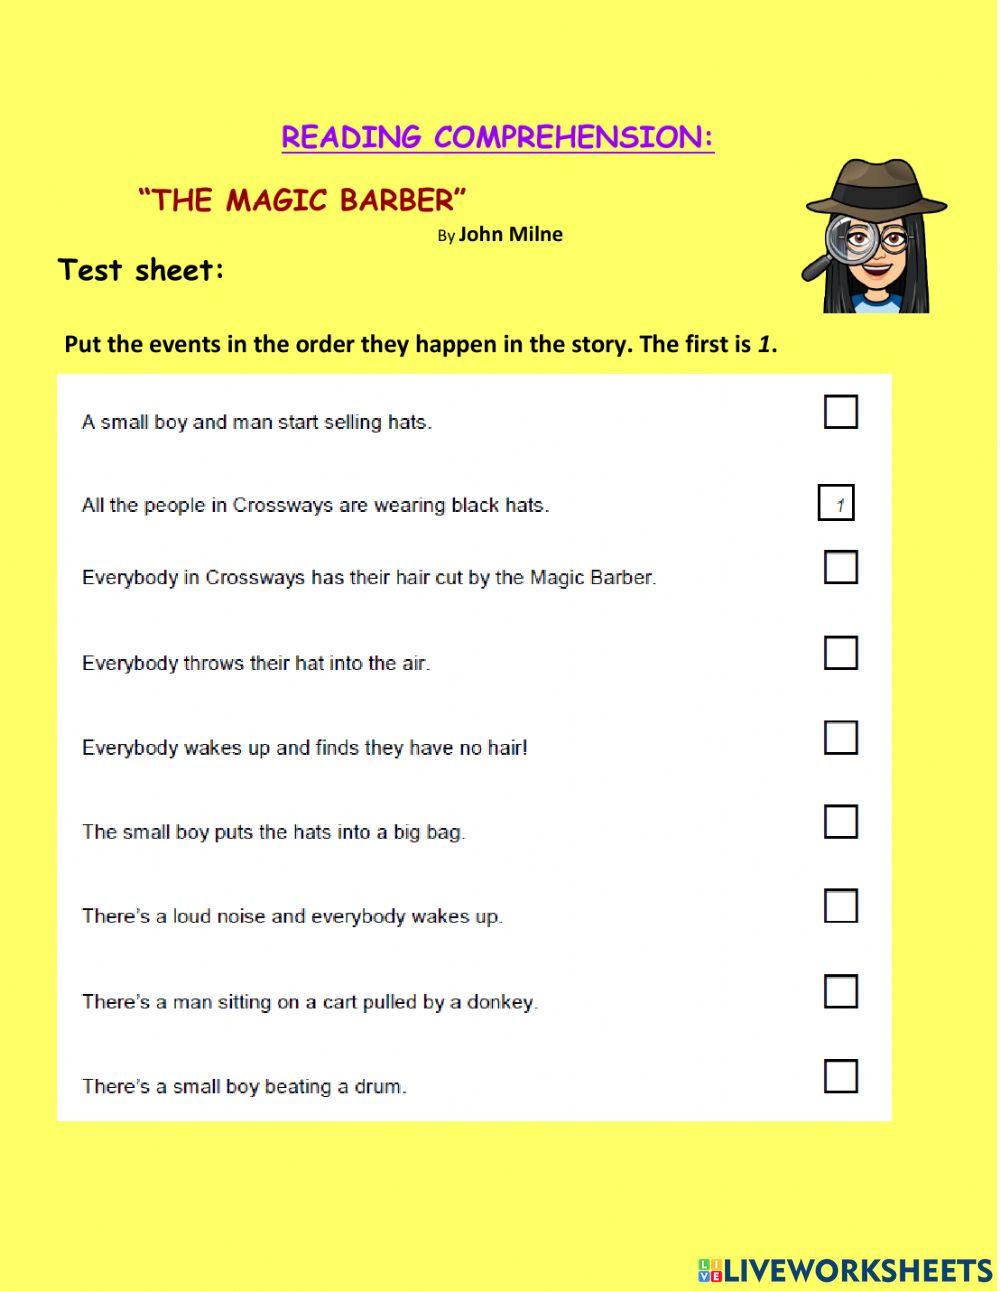 The magic barber test sheet